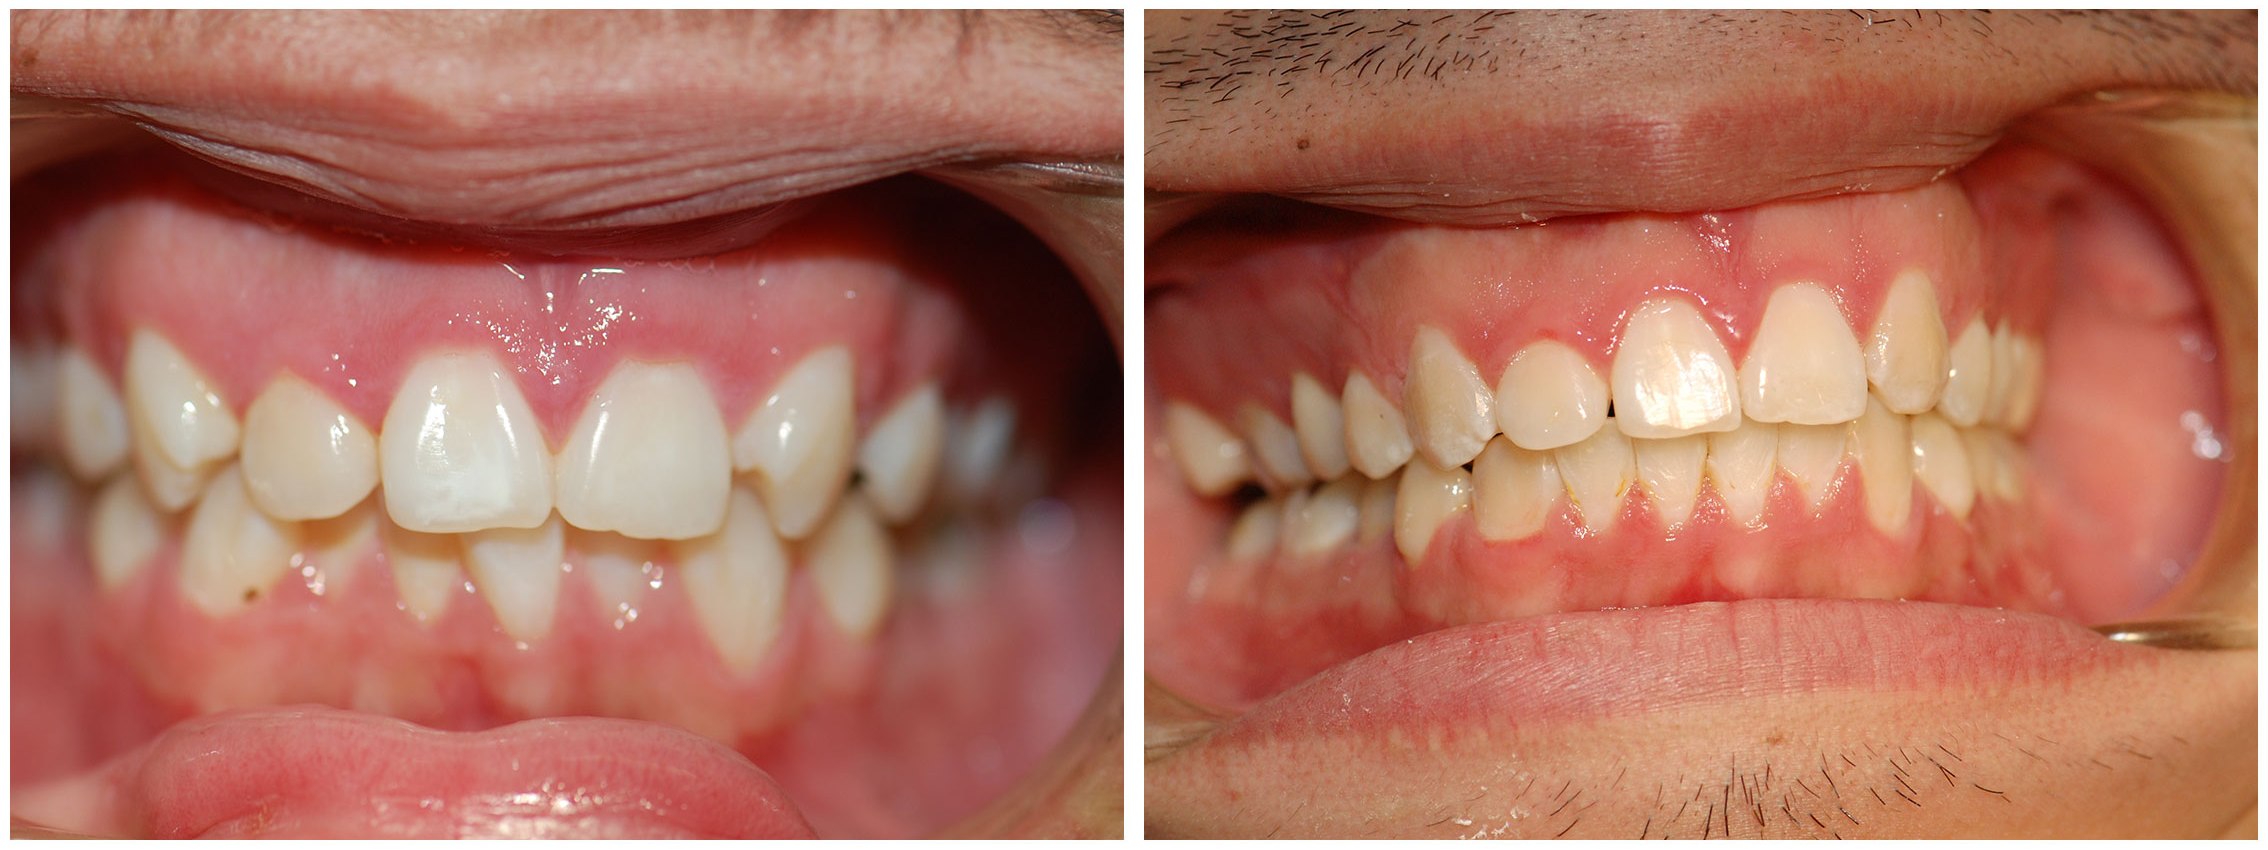 Kids Dental Braces Treatment Before & After